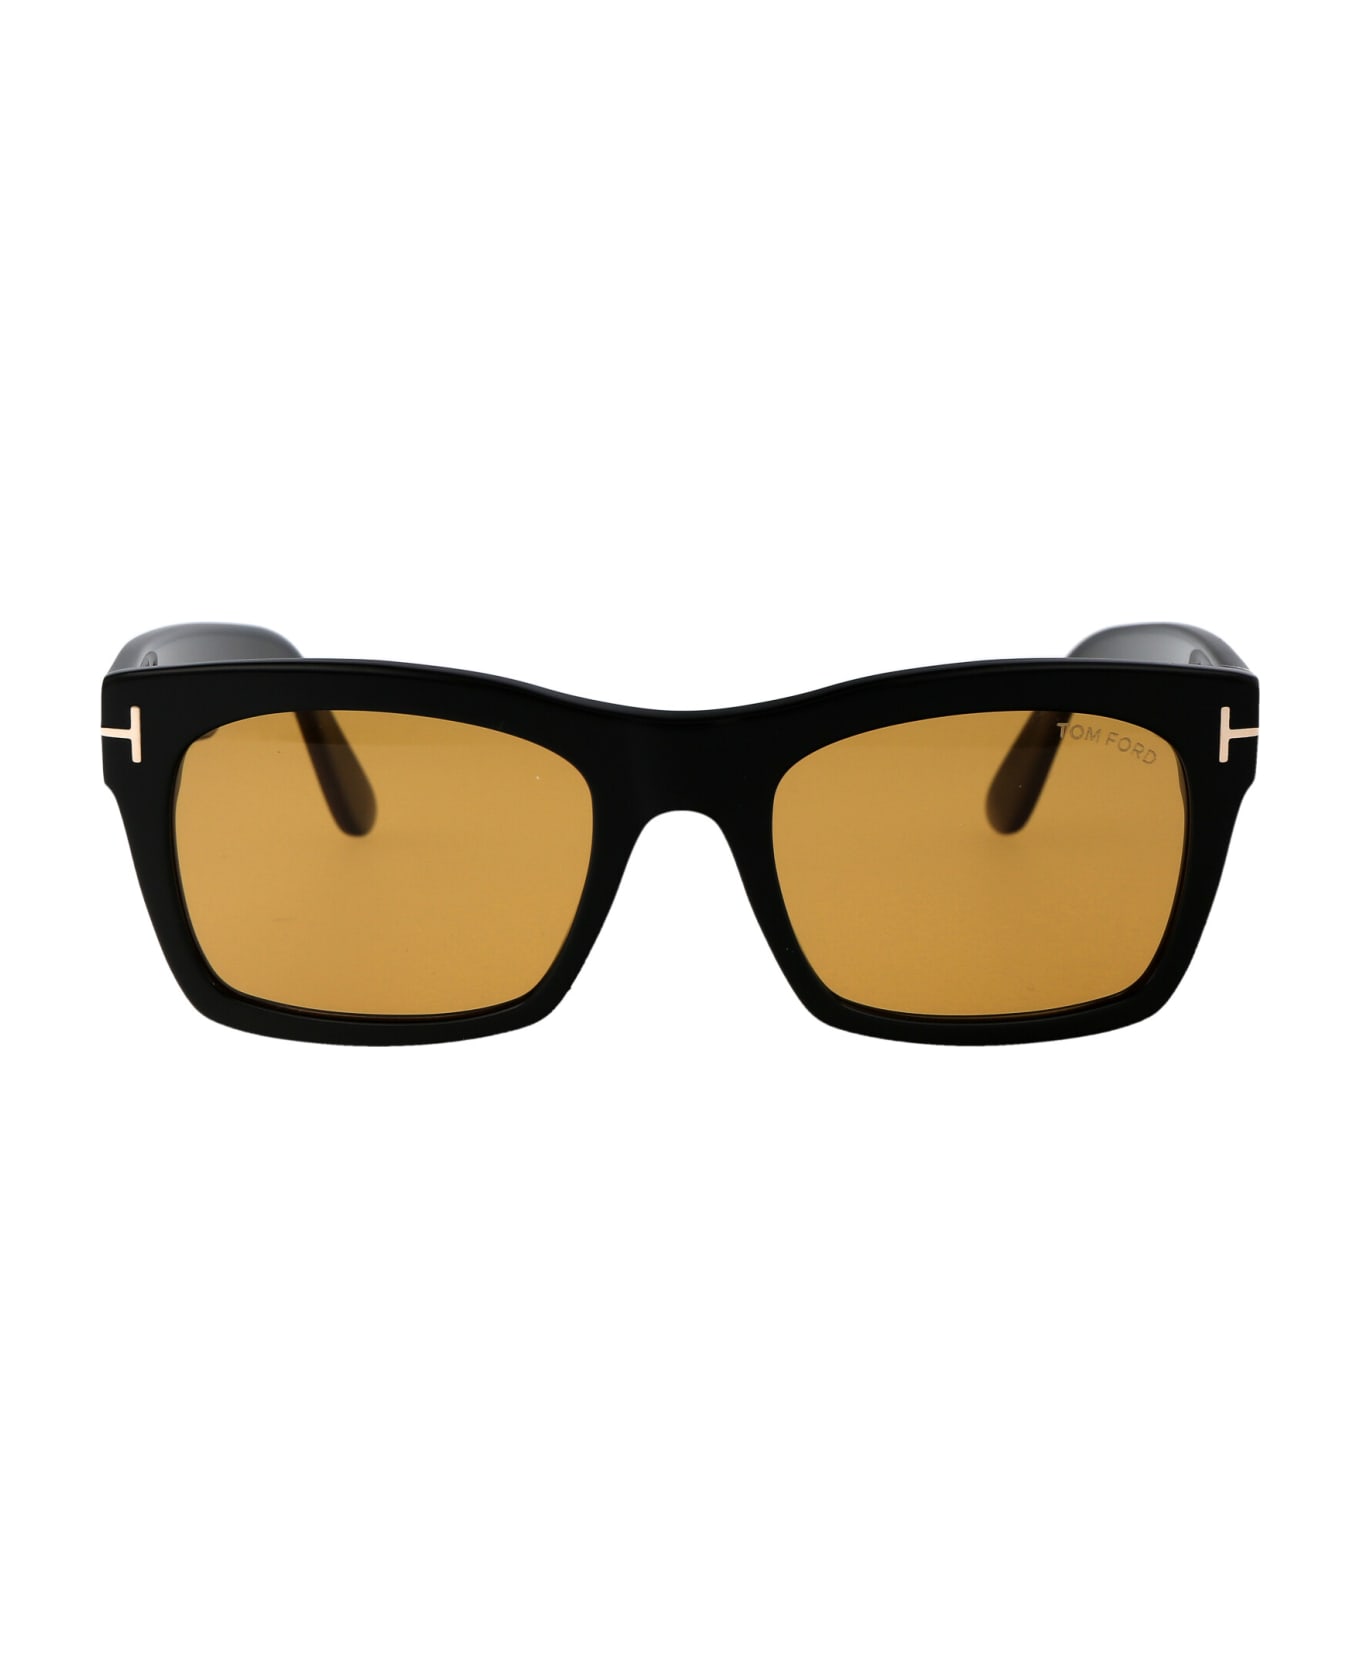 Tom Ford Eyewear Nico-02 Sunglasses - 01E Nero Lucido / Marrone